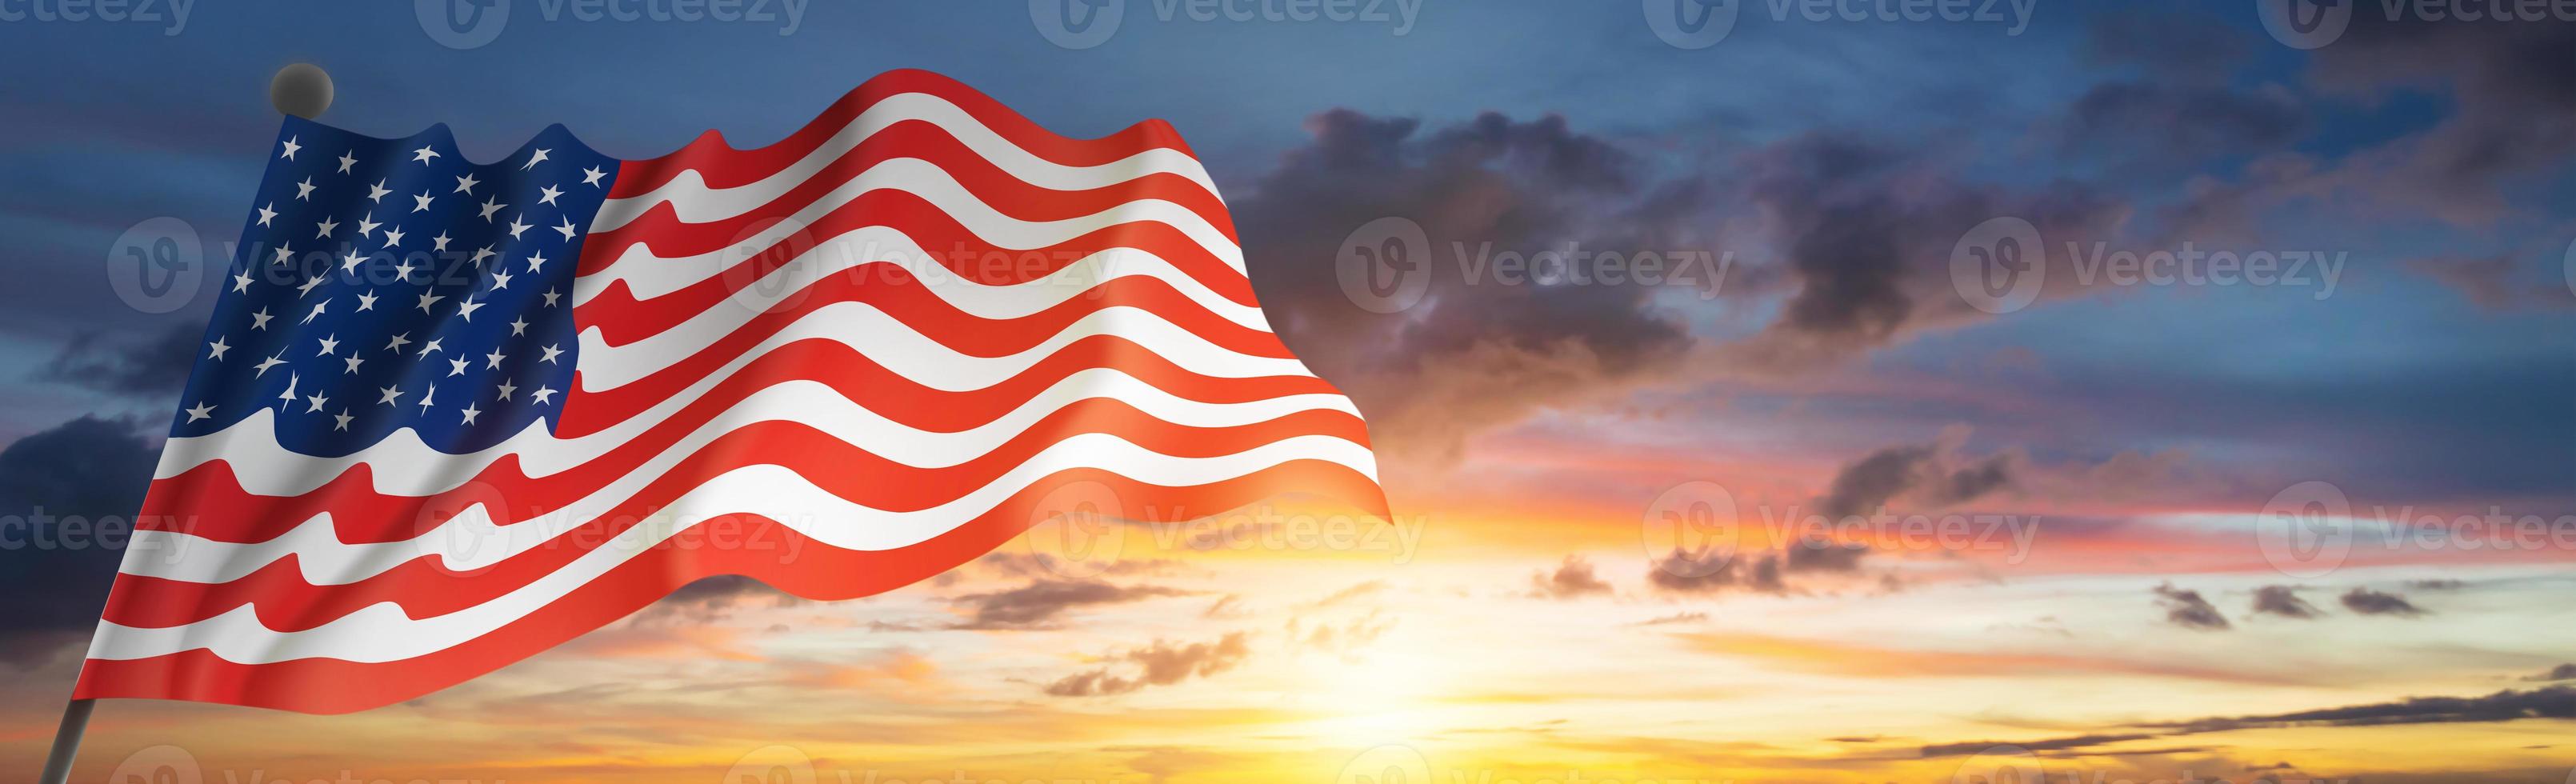 bandeira americana foto